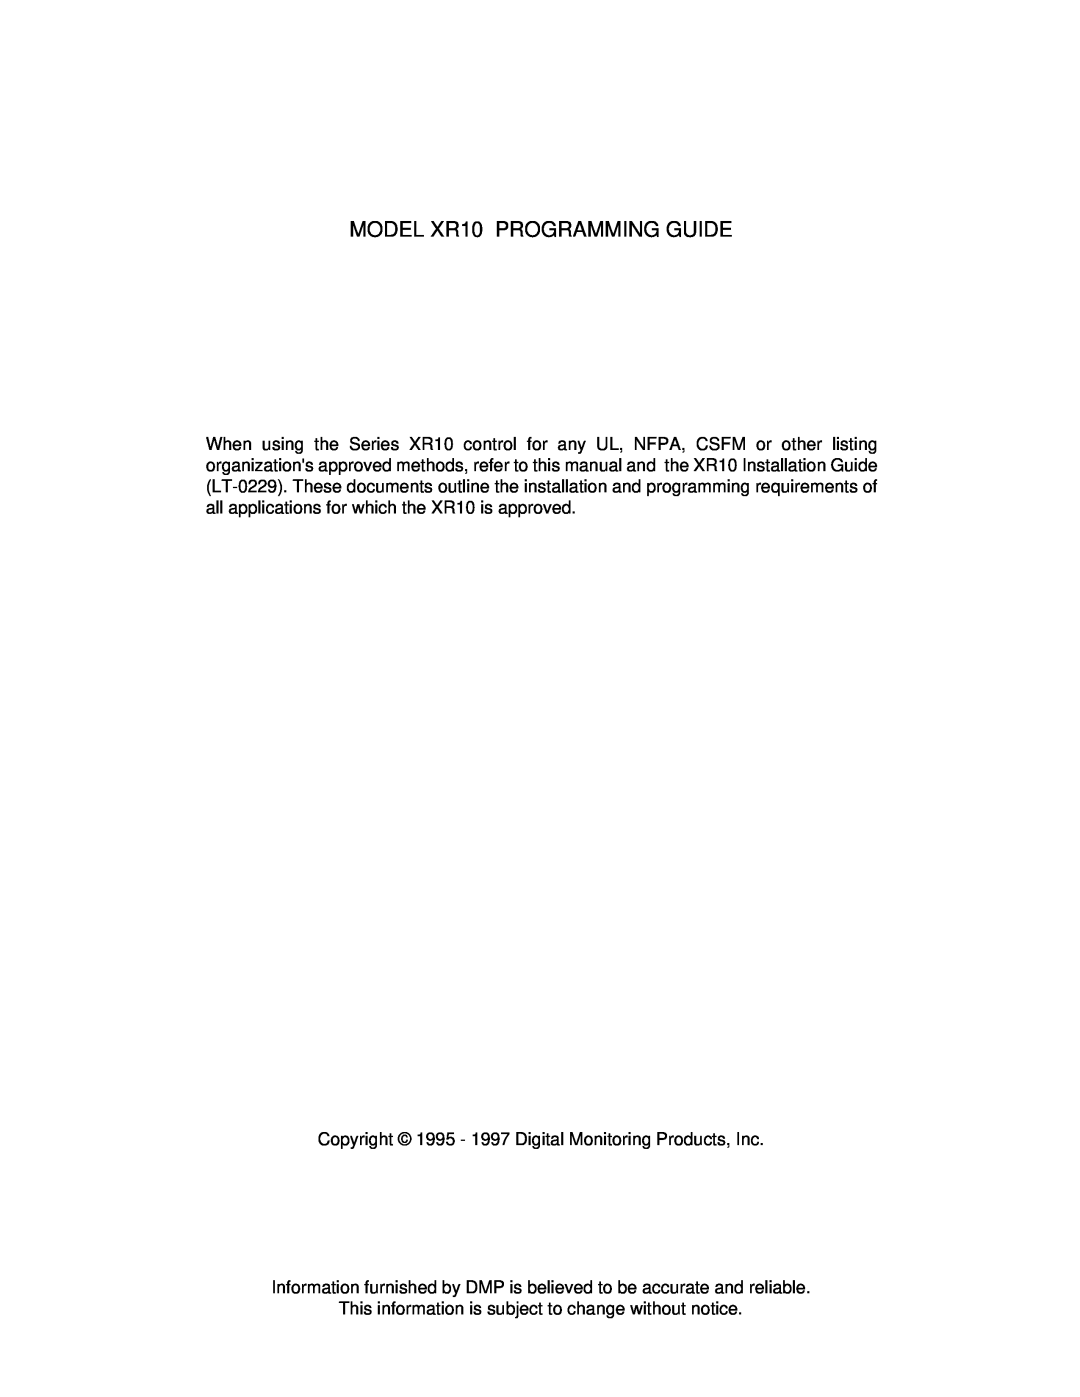 DMP Electronics Command Processor Panel manual MODEL XR10 PROGRAMMING GUIDE 